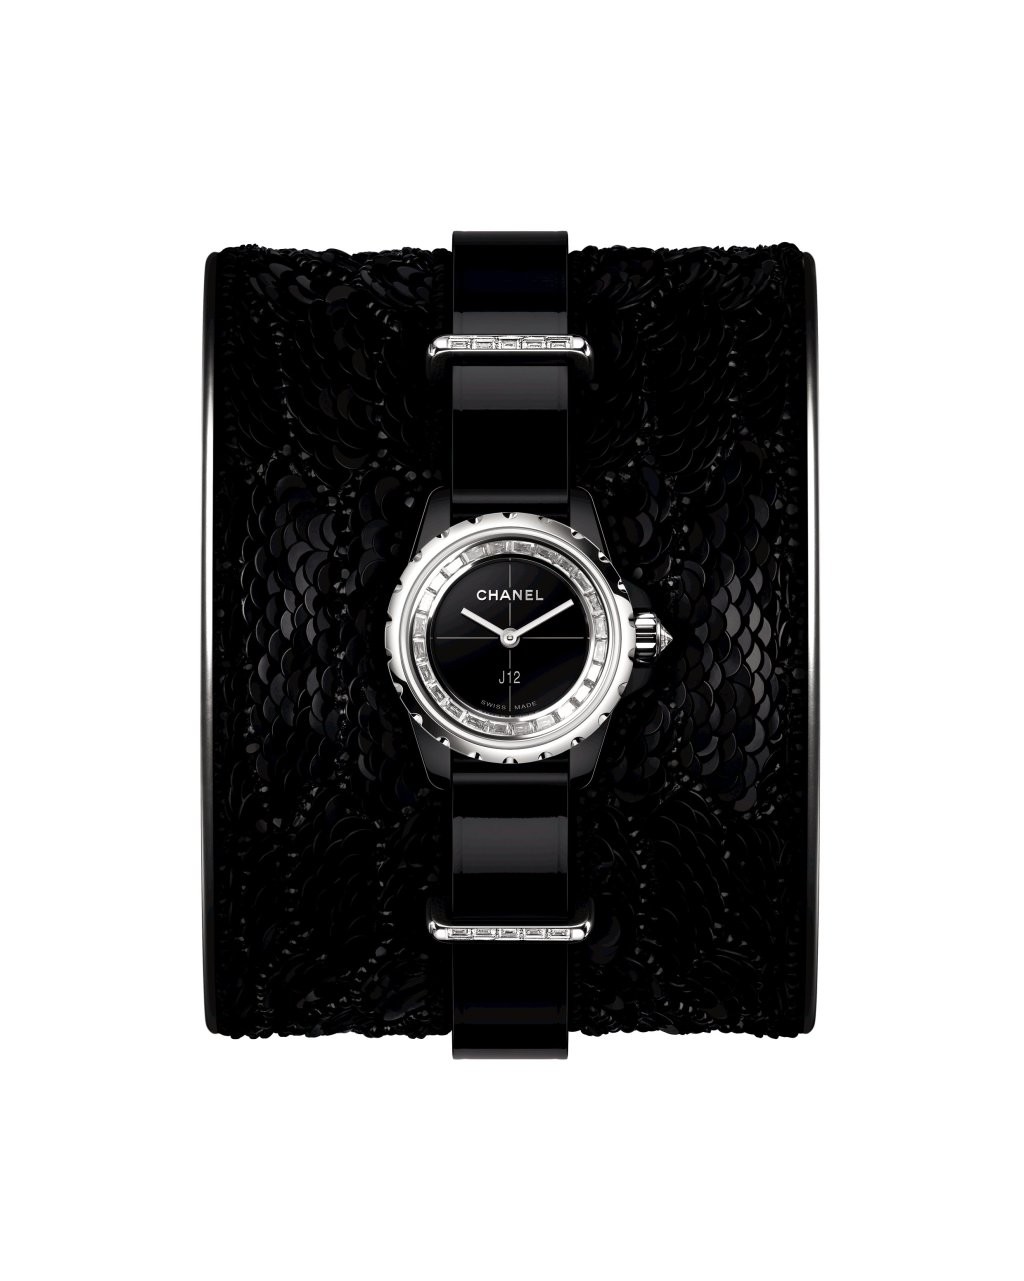 Chanel lança relógio J12 XS (Foto: Divulgação)